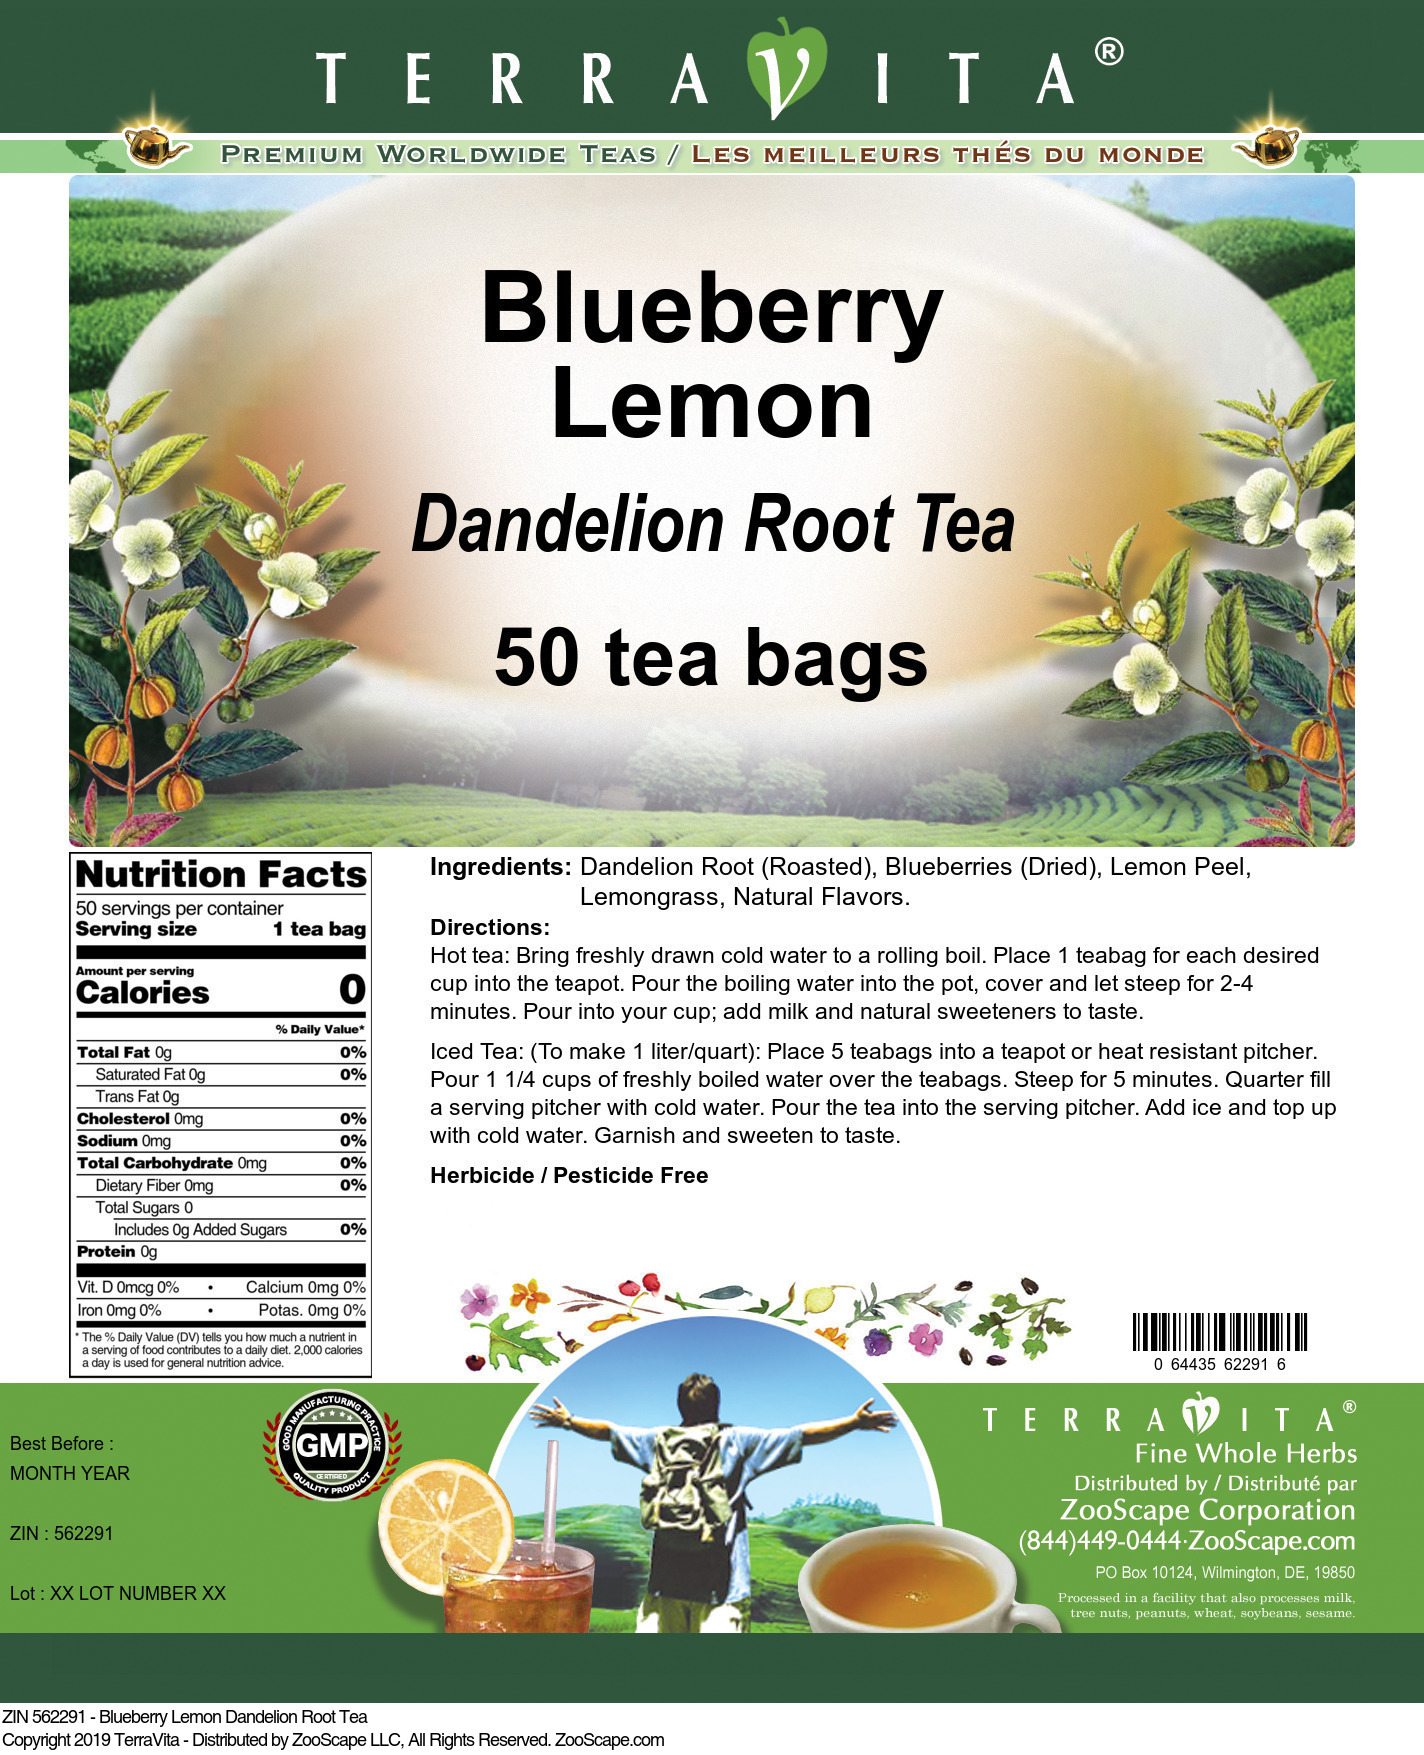 Blueberry Lemon Dandelion Root Tea - Label